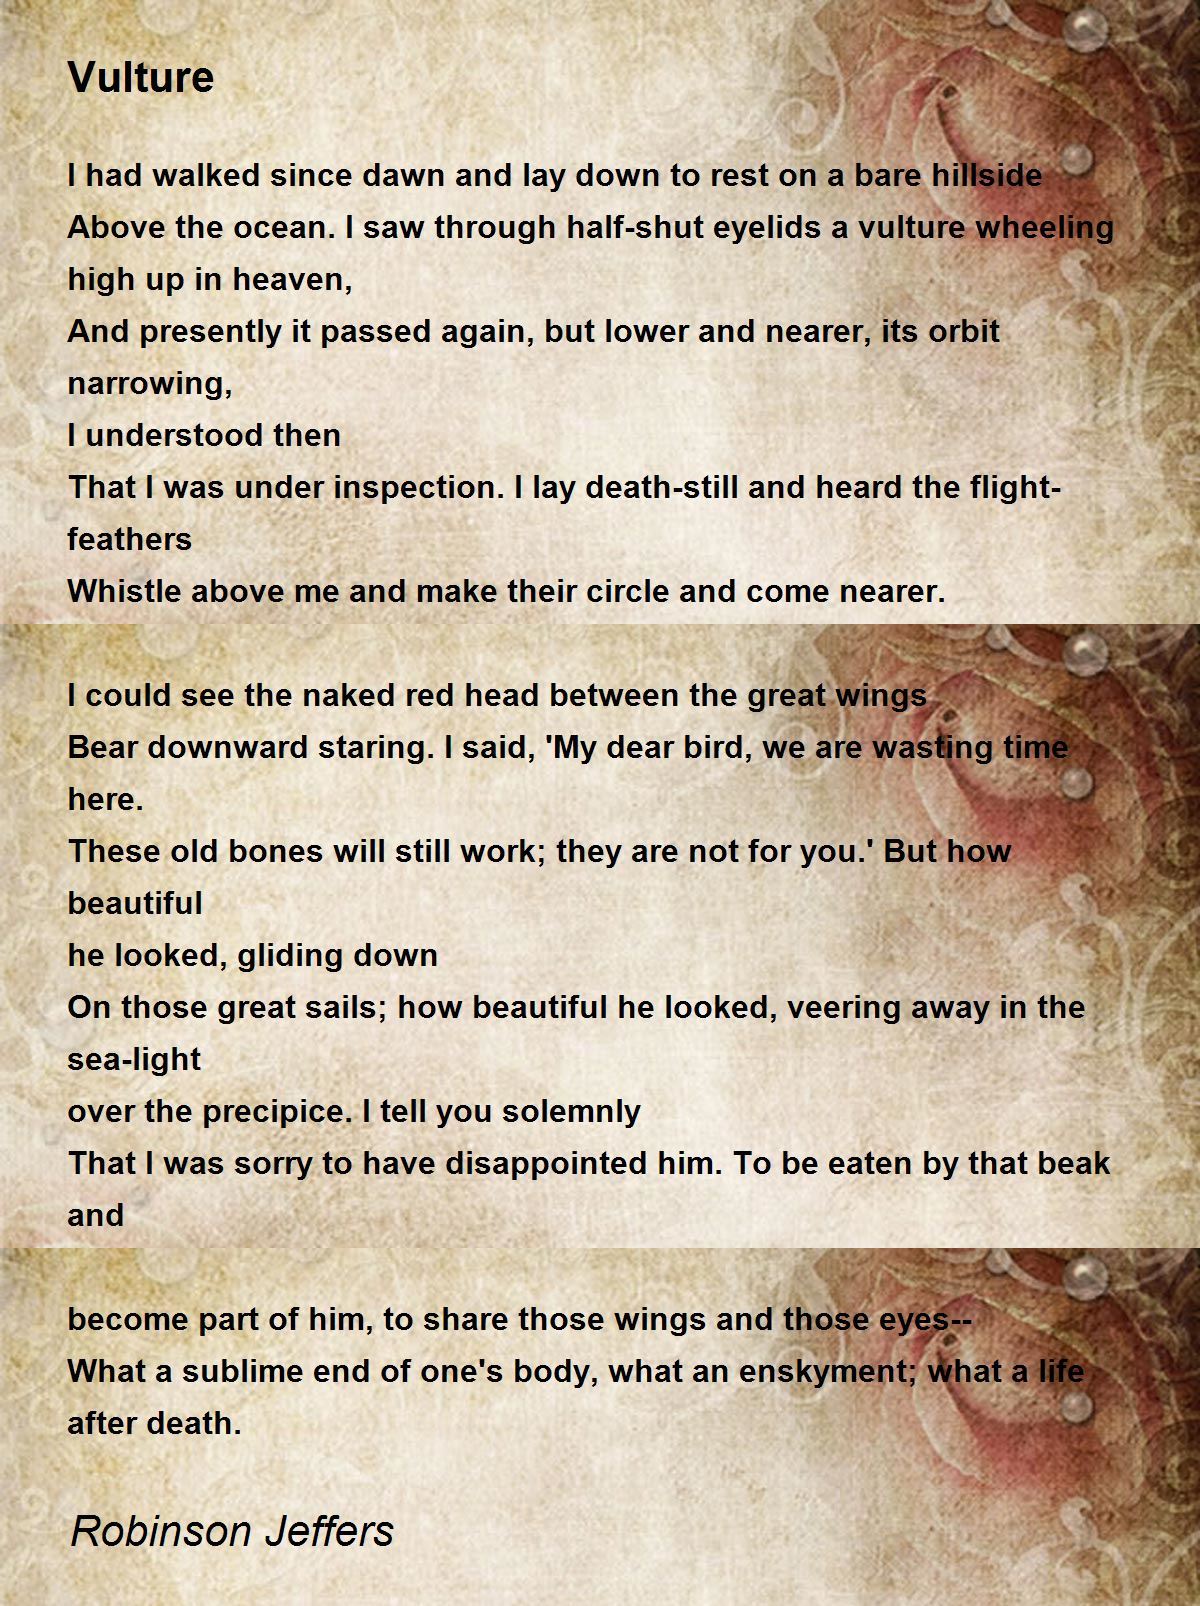 Vulture Poem by Robinson Jeffers - Poem Hunter